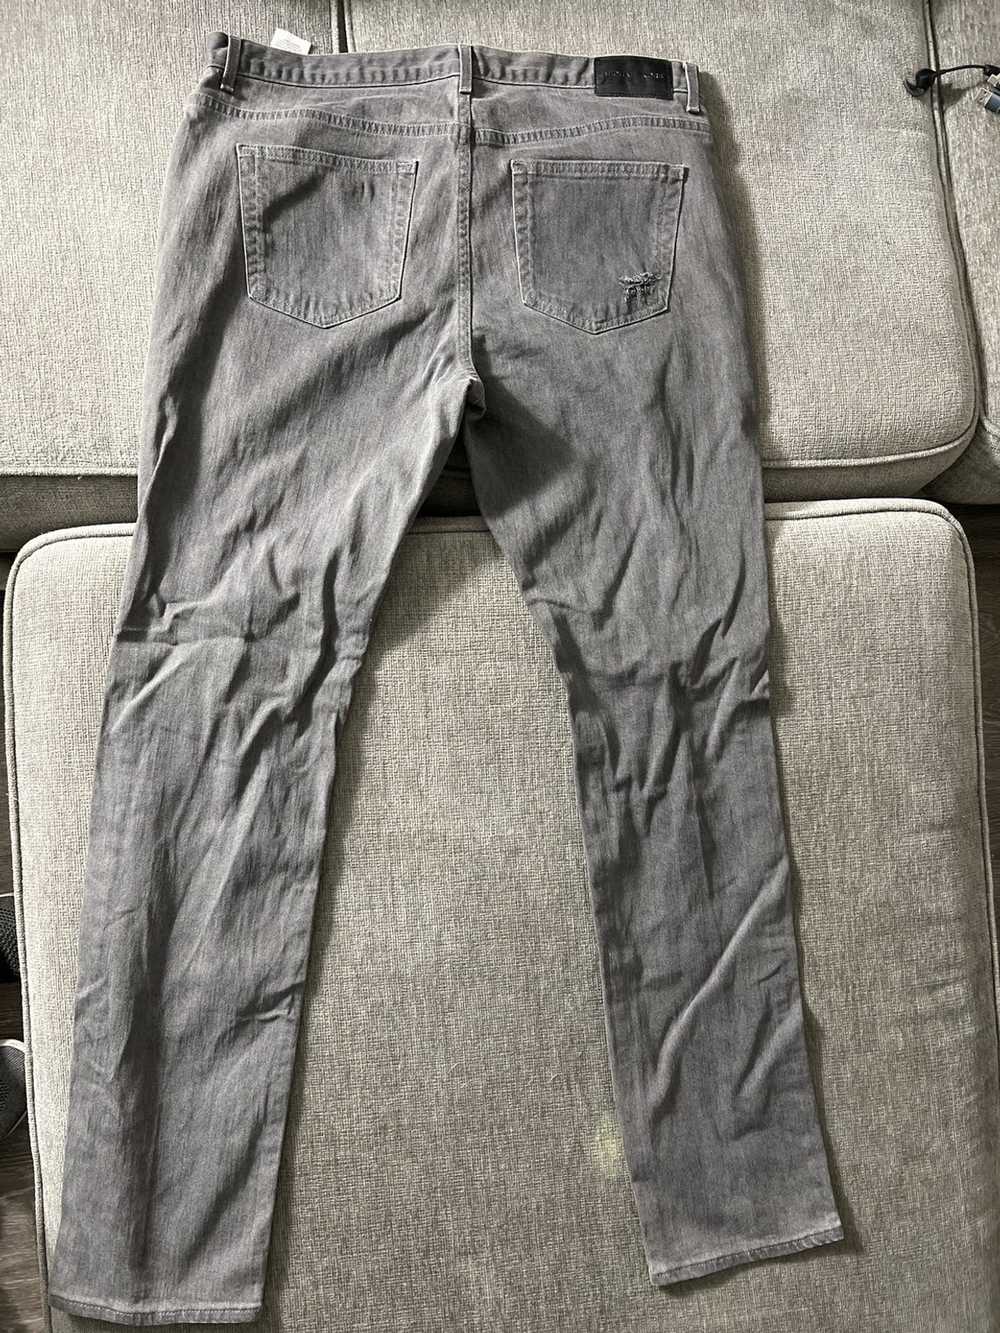 Michael Kors Micheal Kors jeans - image 2